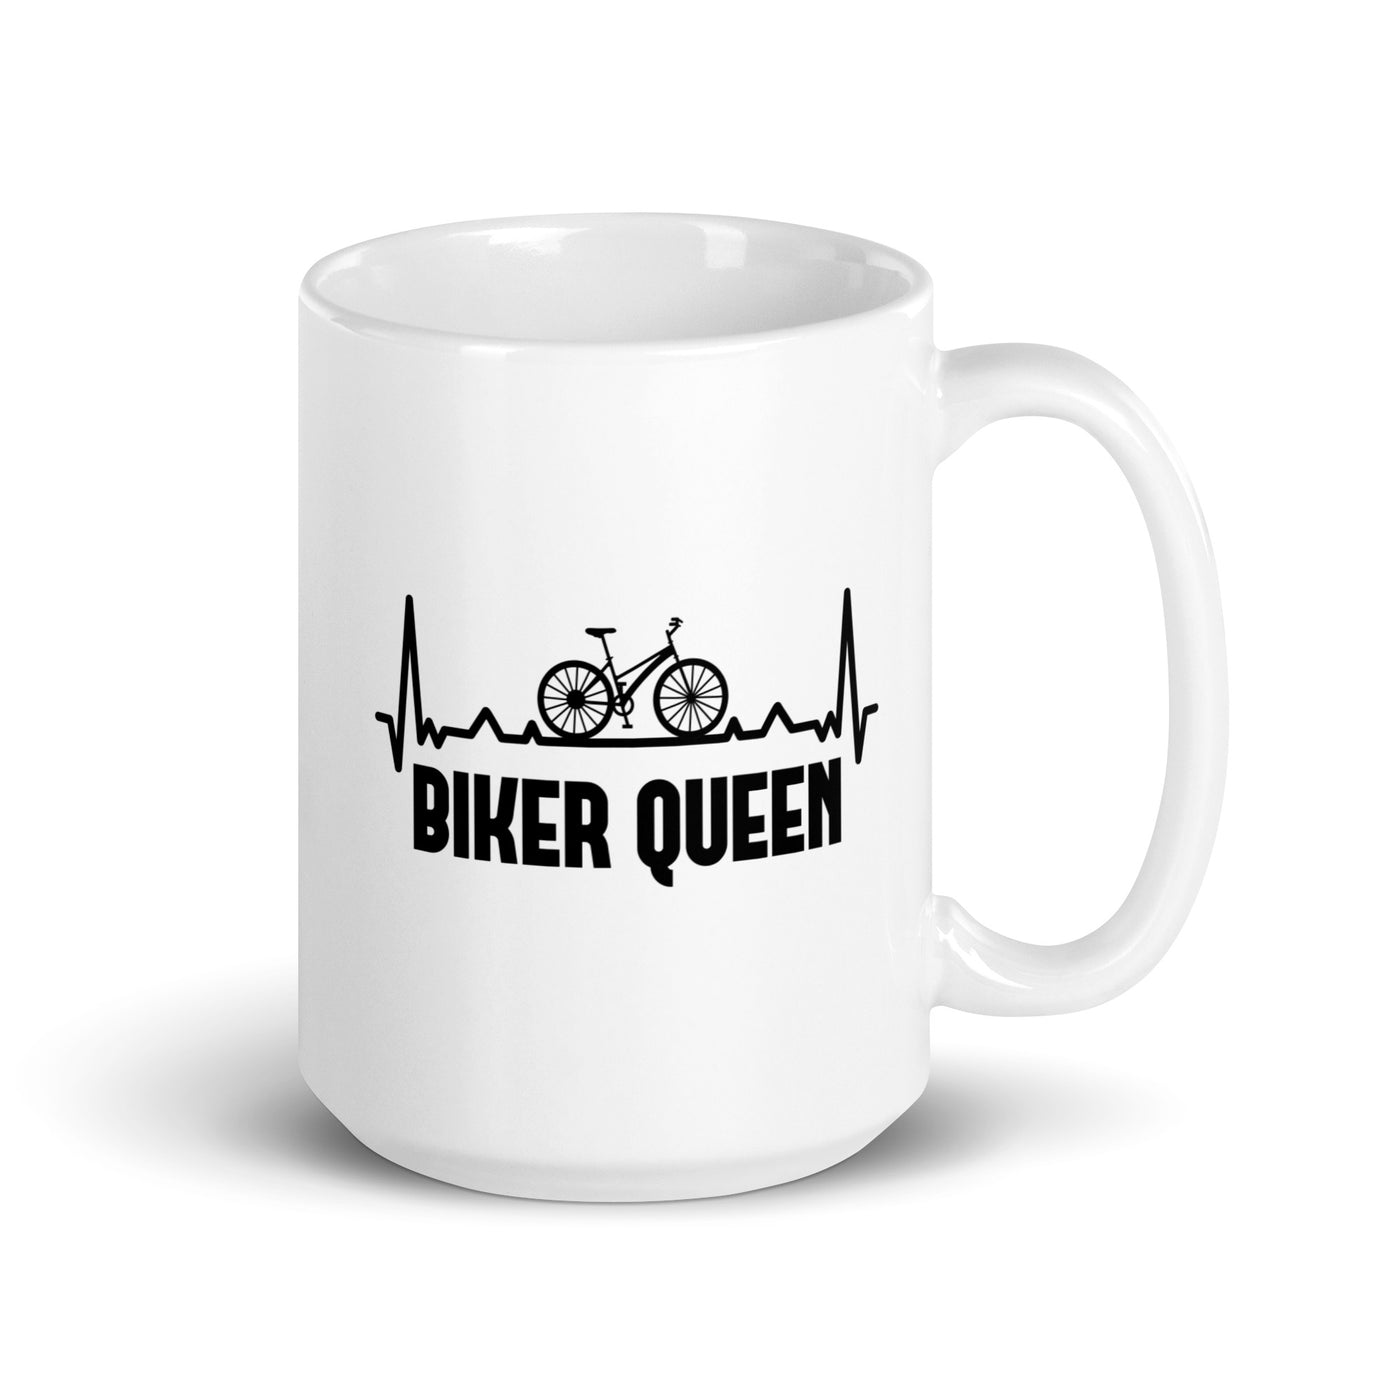 Biker Queen 1 - Tasse fahrrad 15oz